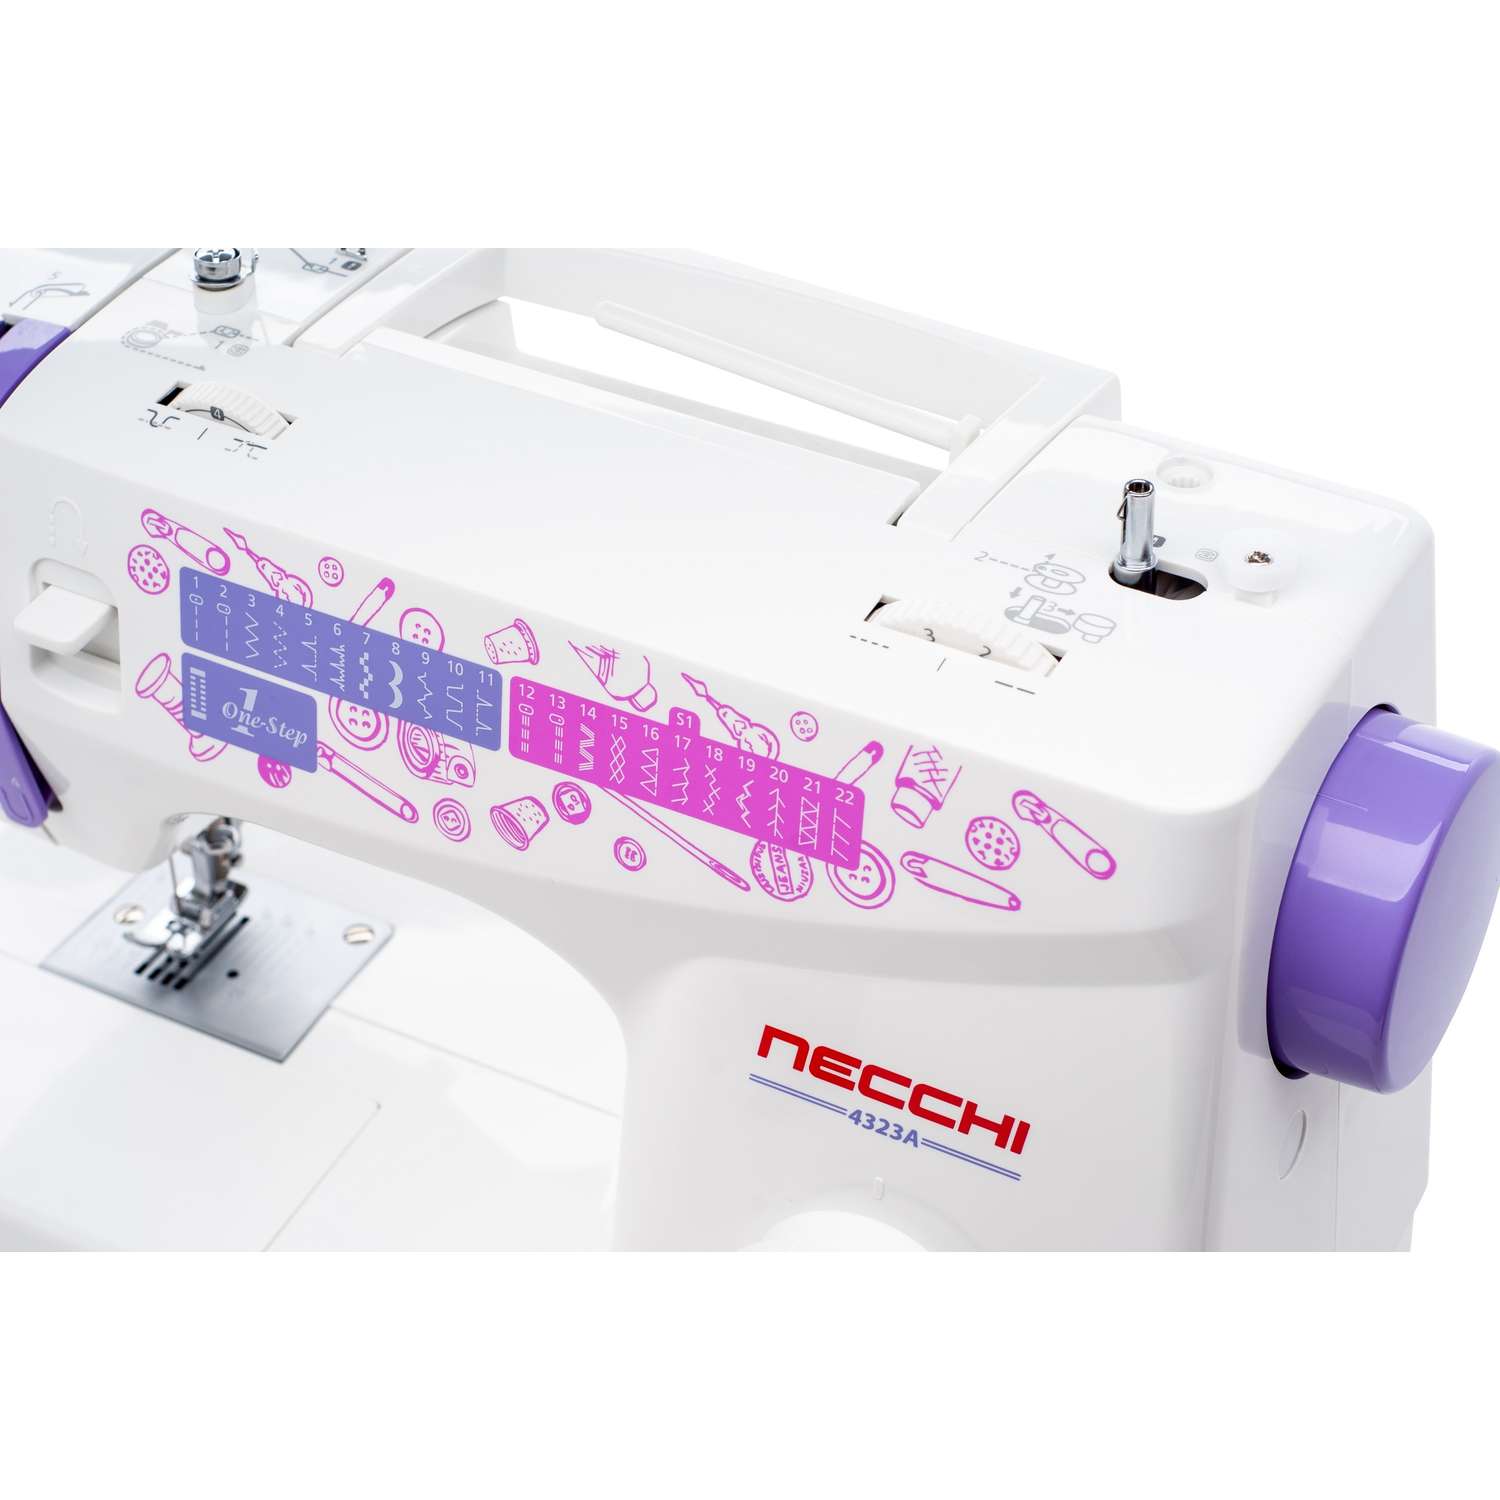 Швейная машина Necchi 4323A - фото 4